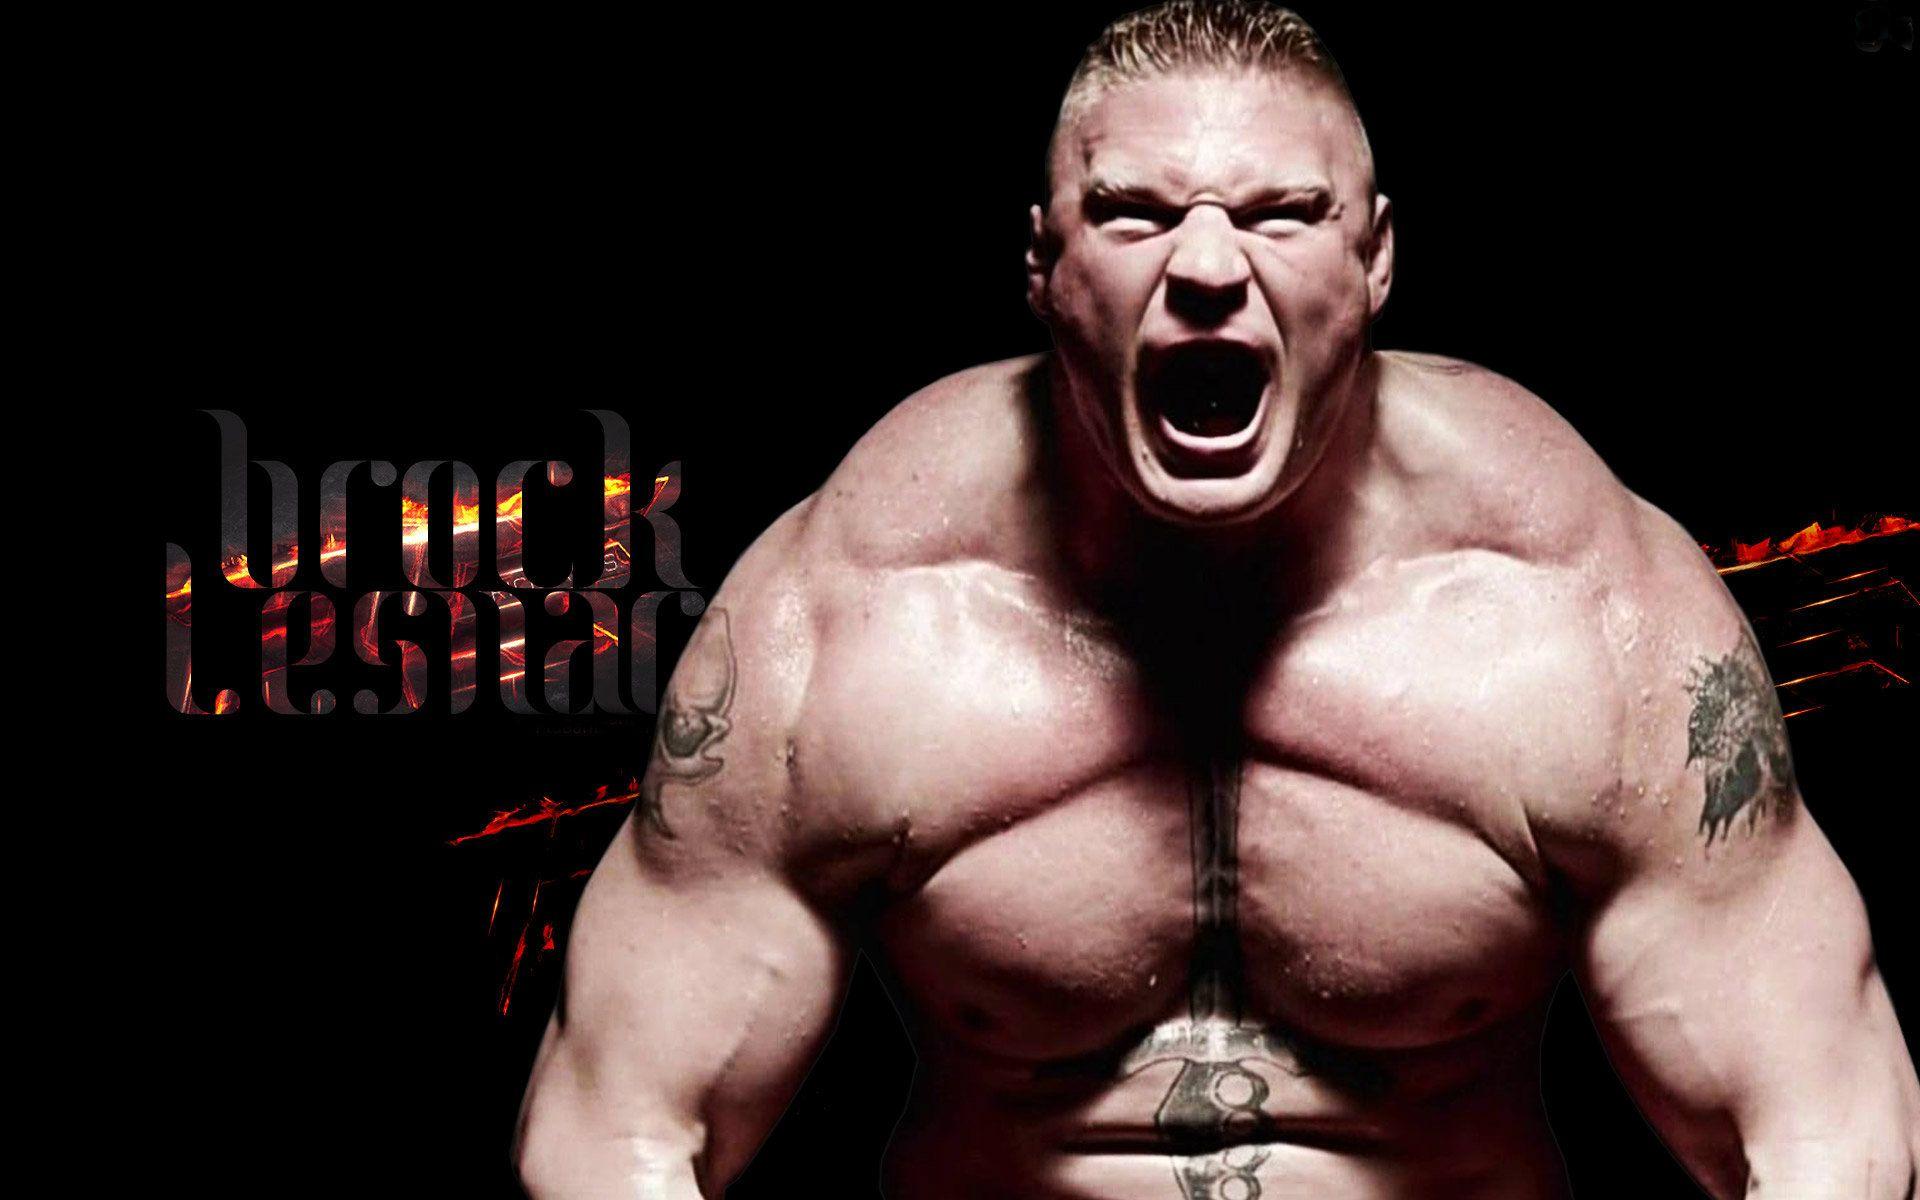 Brock Lesnar WWE Wrestler HD Wallpaper And Image Download Free